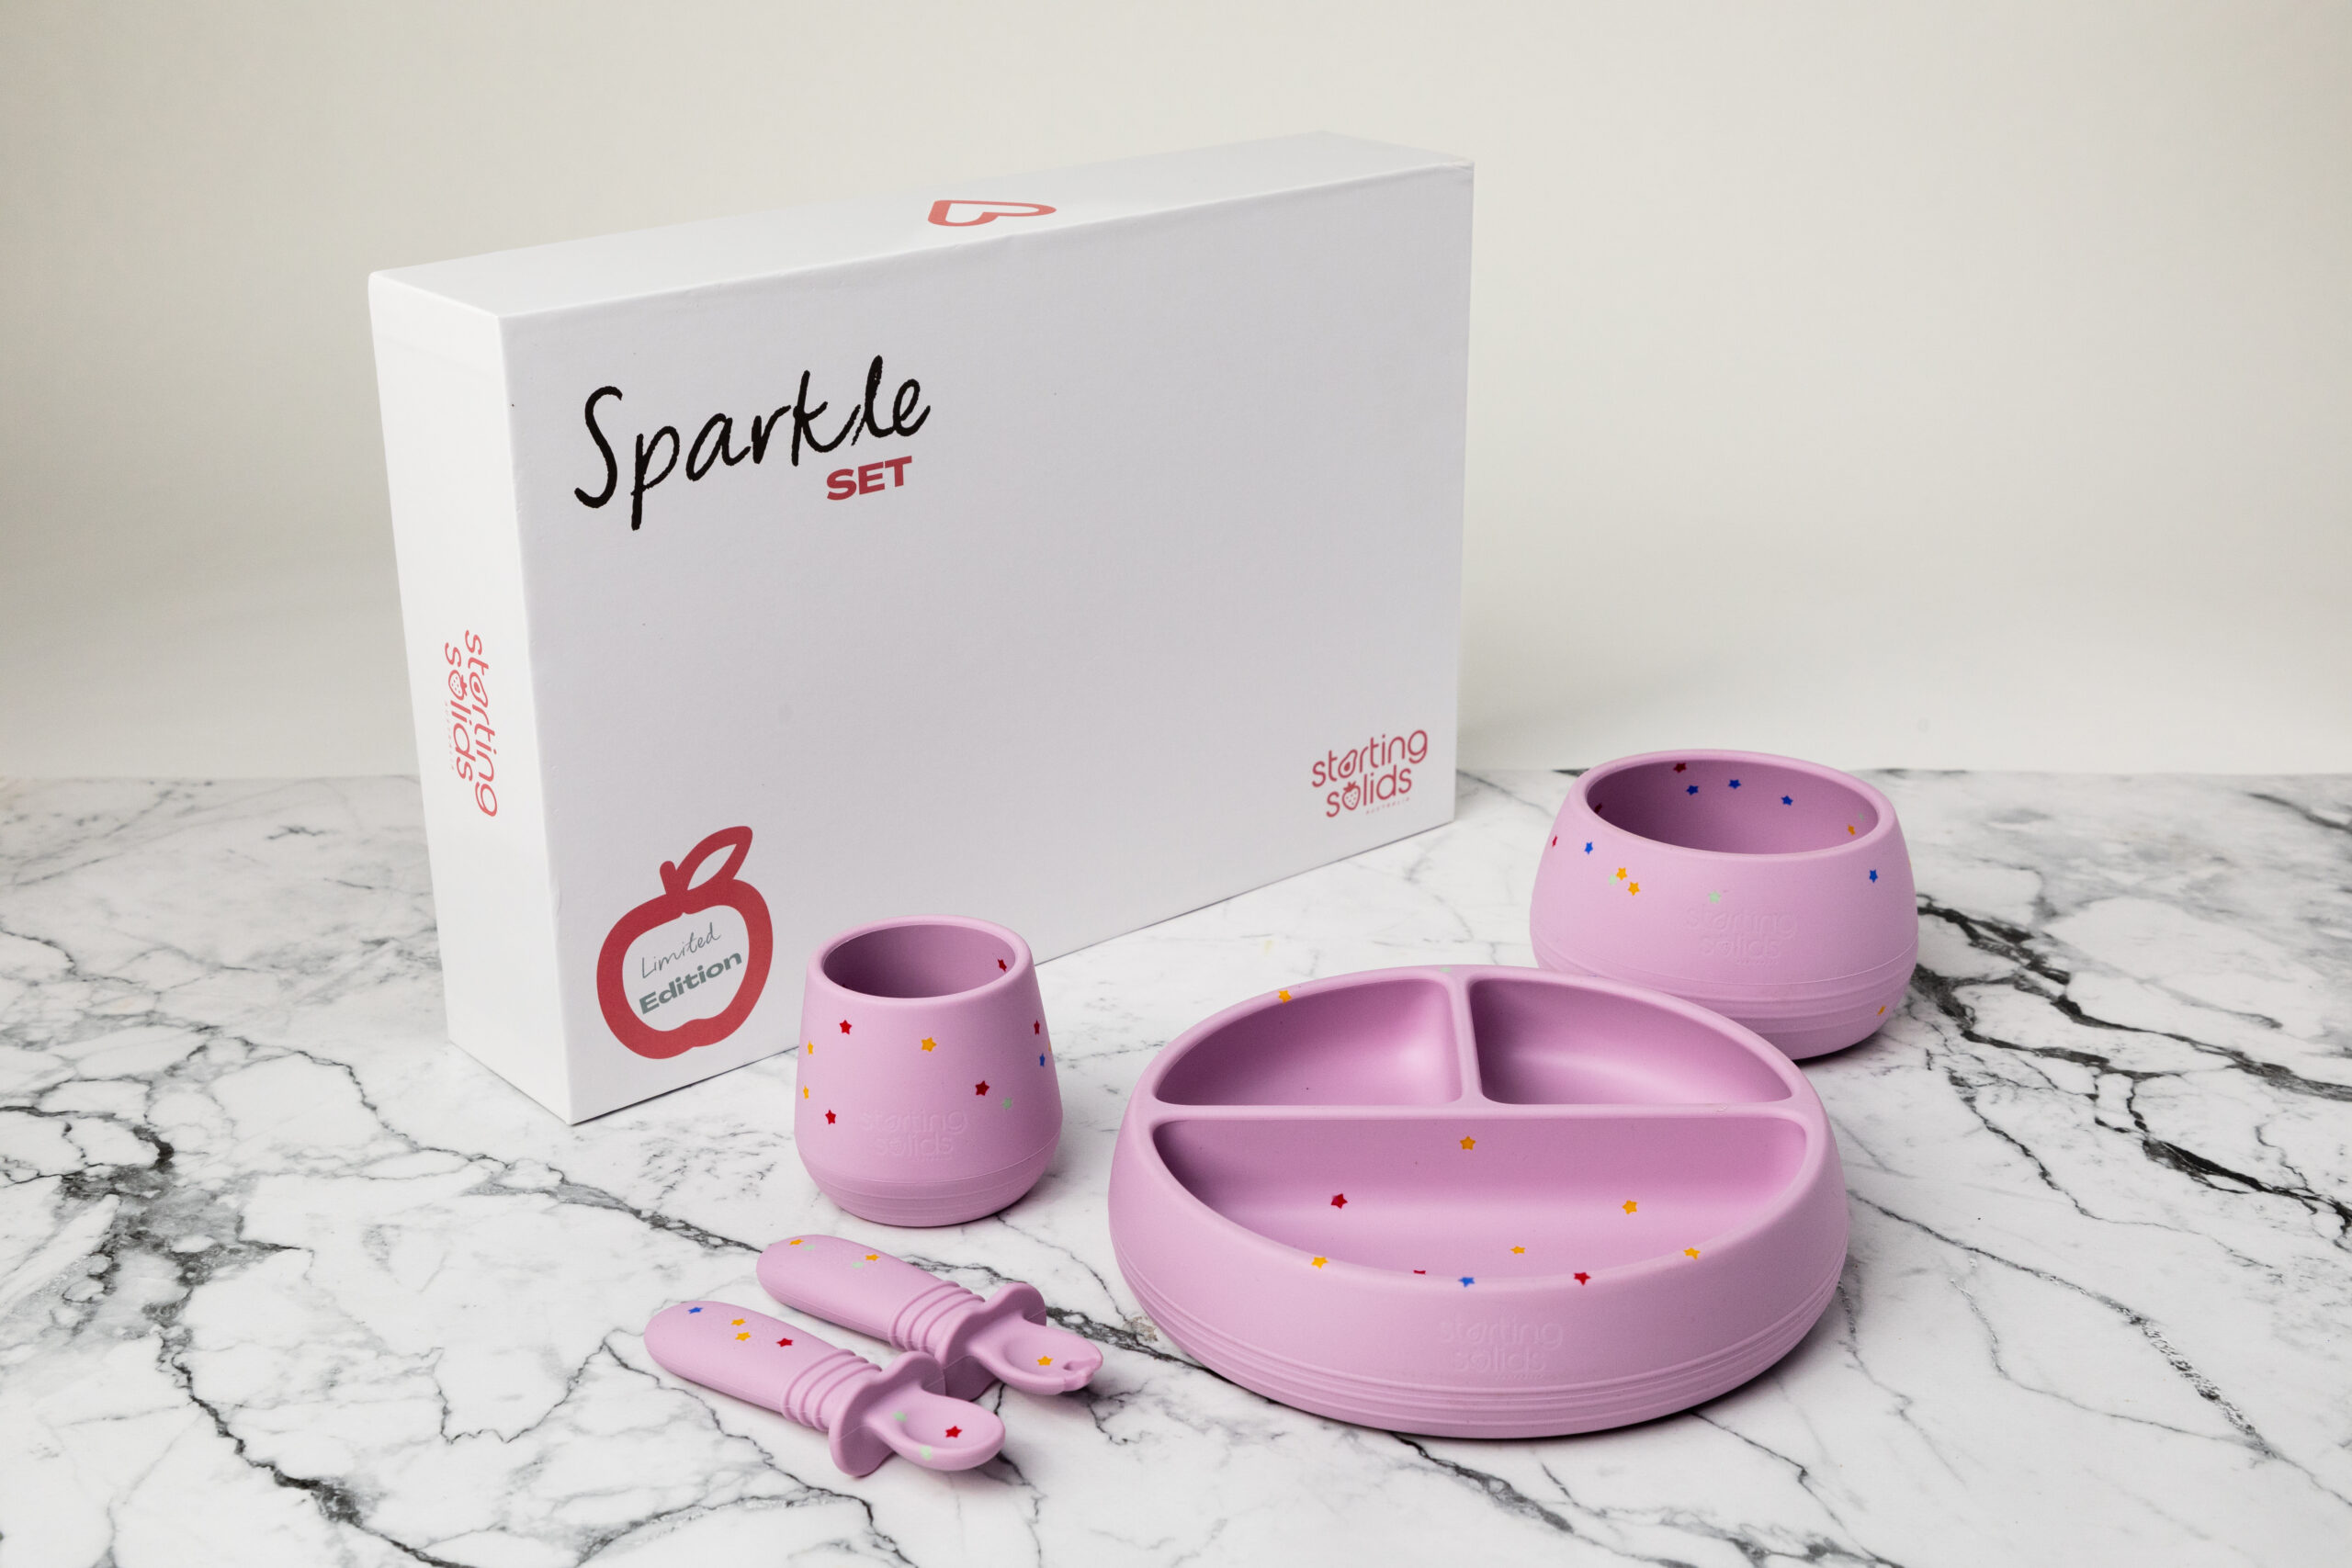 Sparkle Divided Set Limited Edition | Starting Solids Australia